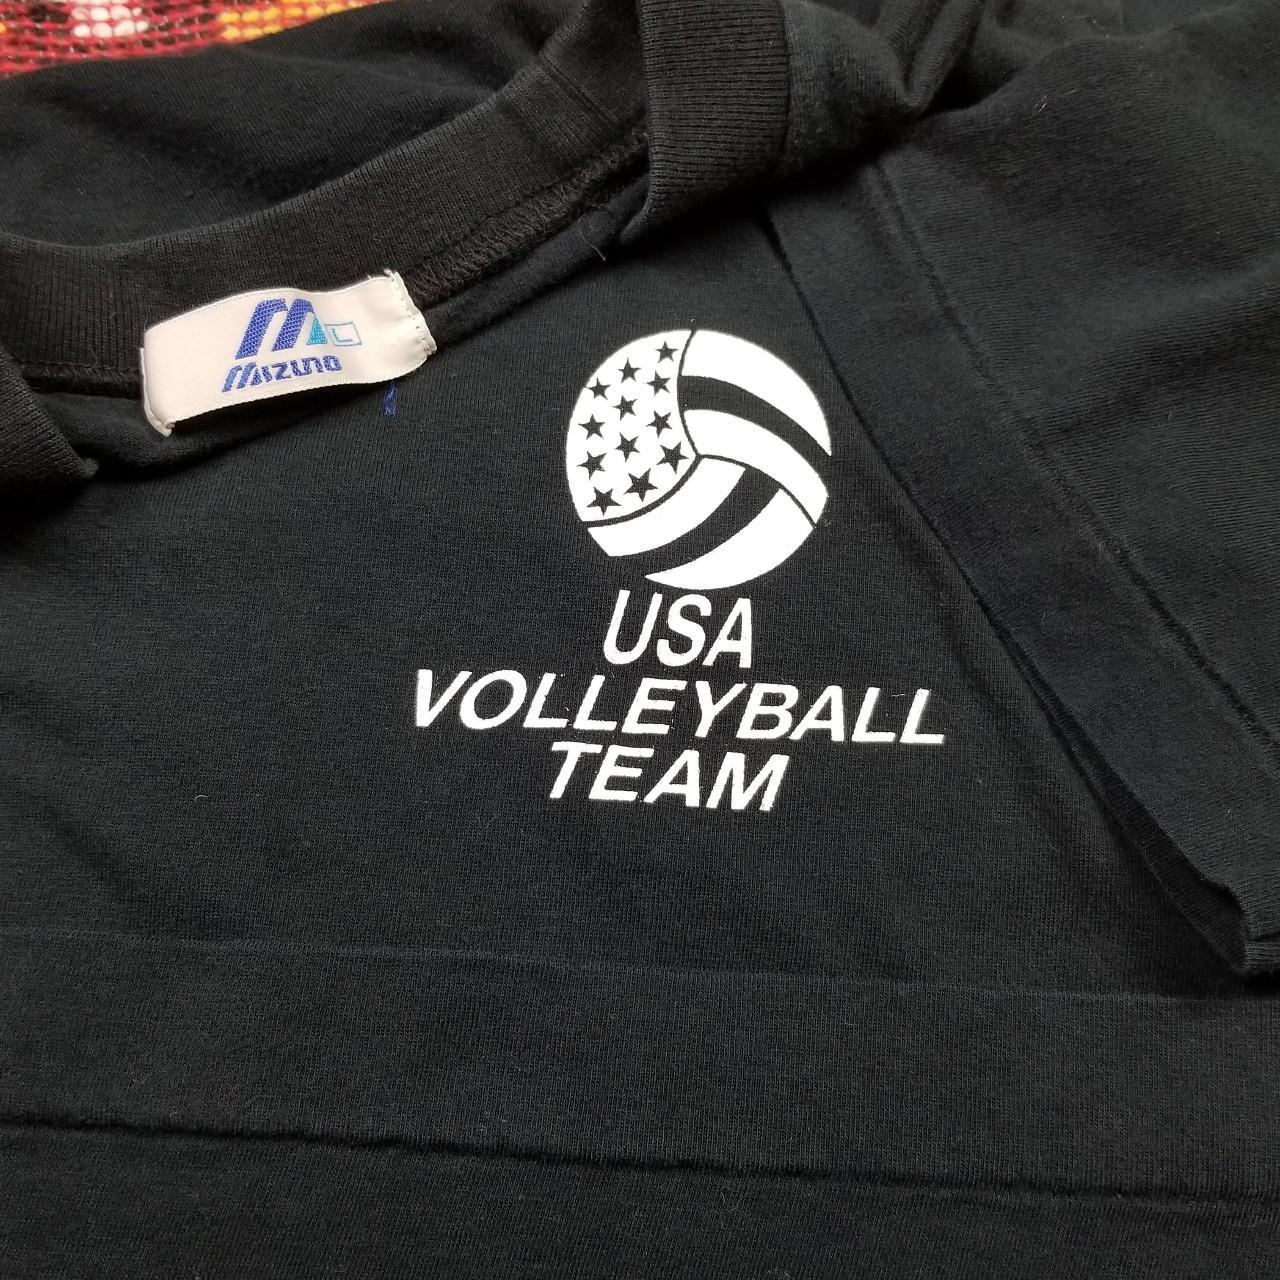 Vintage Mizuno USA Volleyball Team t shirt Adult... - Depop